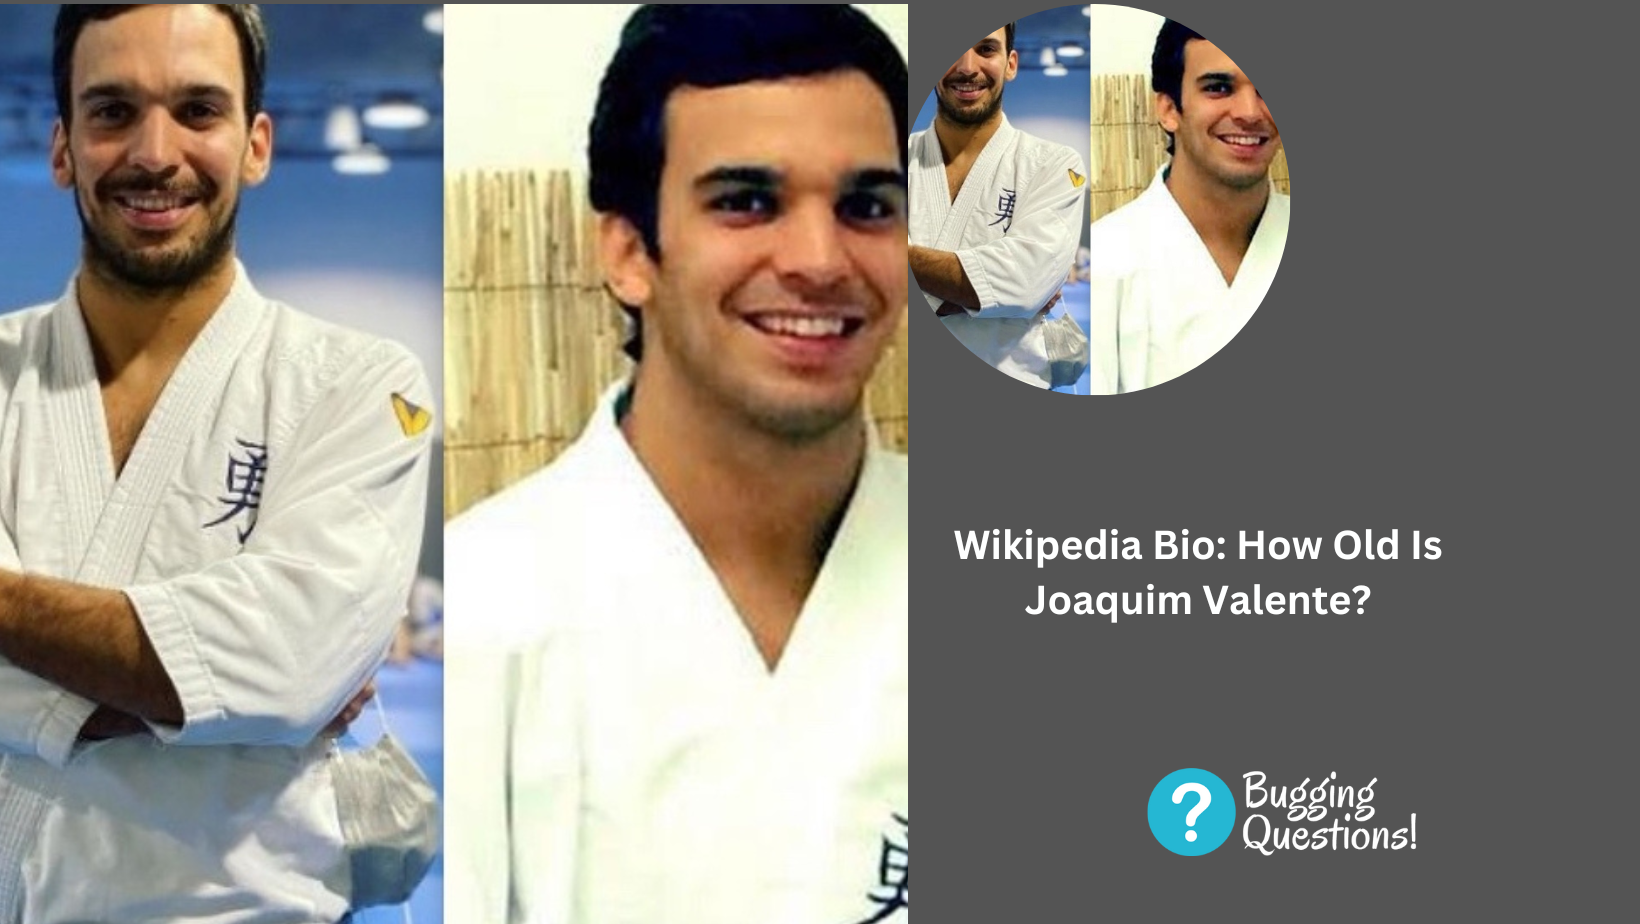 Wikipedia Bio: How Old Is Joaquim Valente?